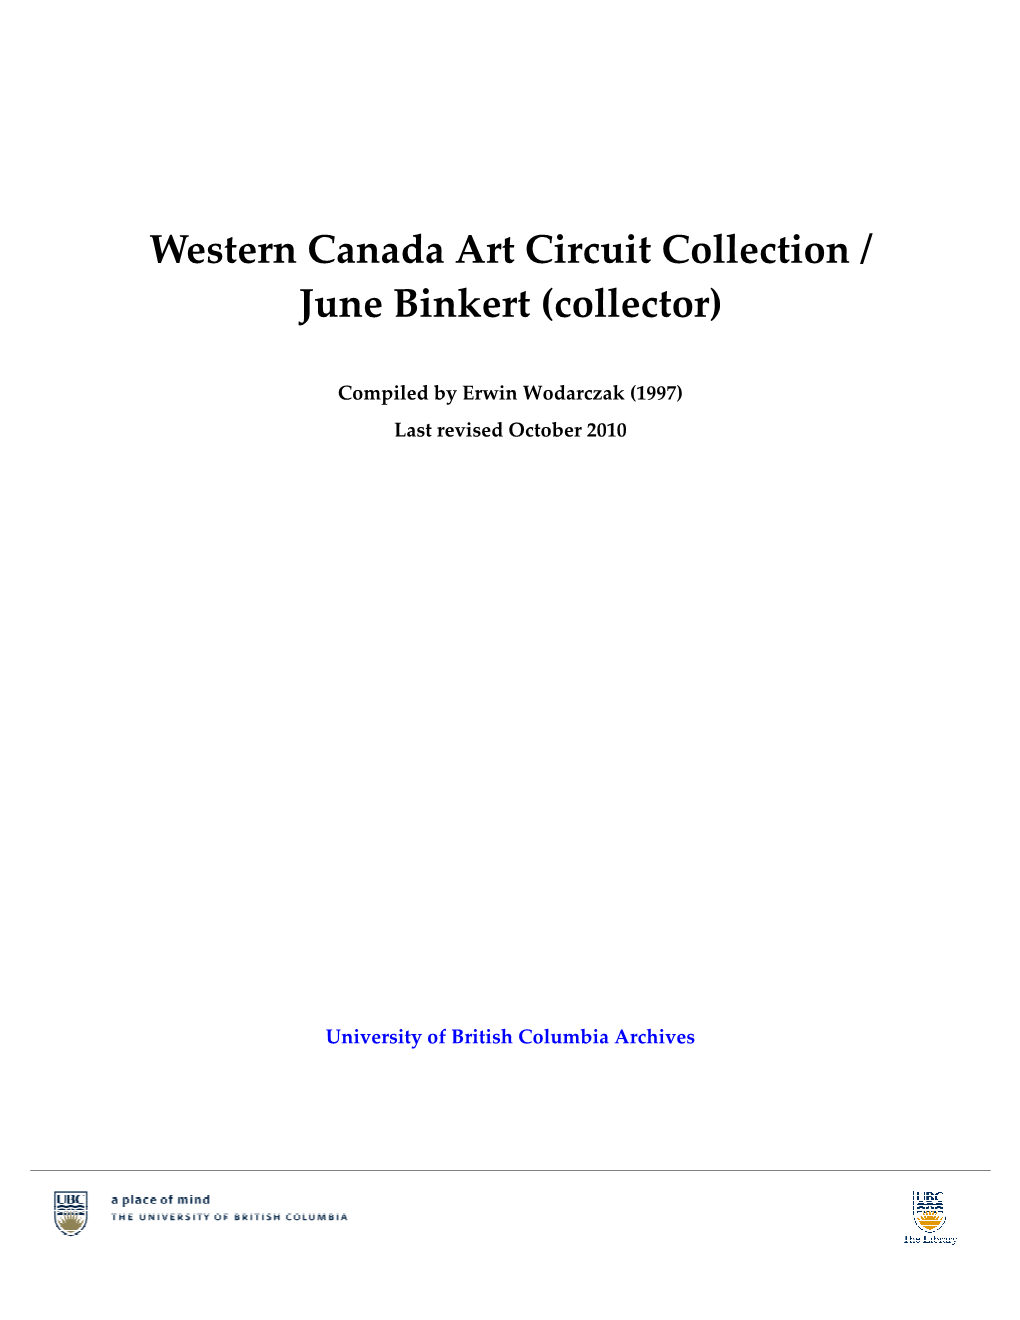 Western Canada Art Circuit Collection / June Binkert (Collector)